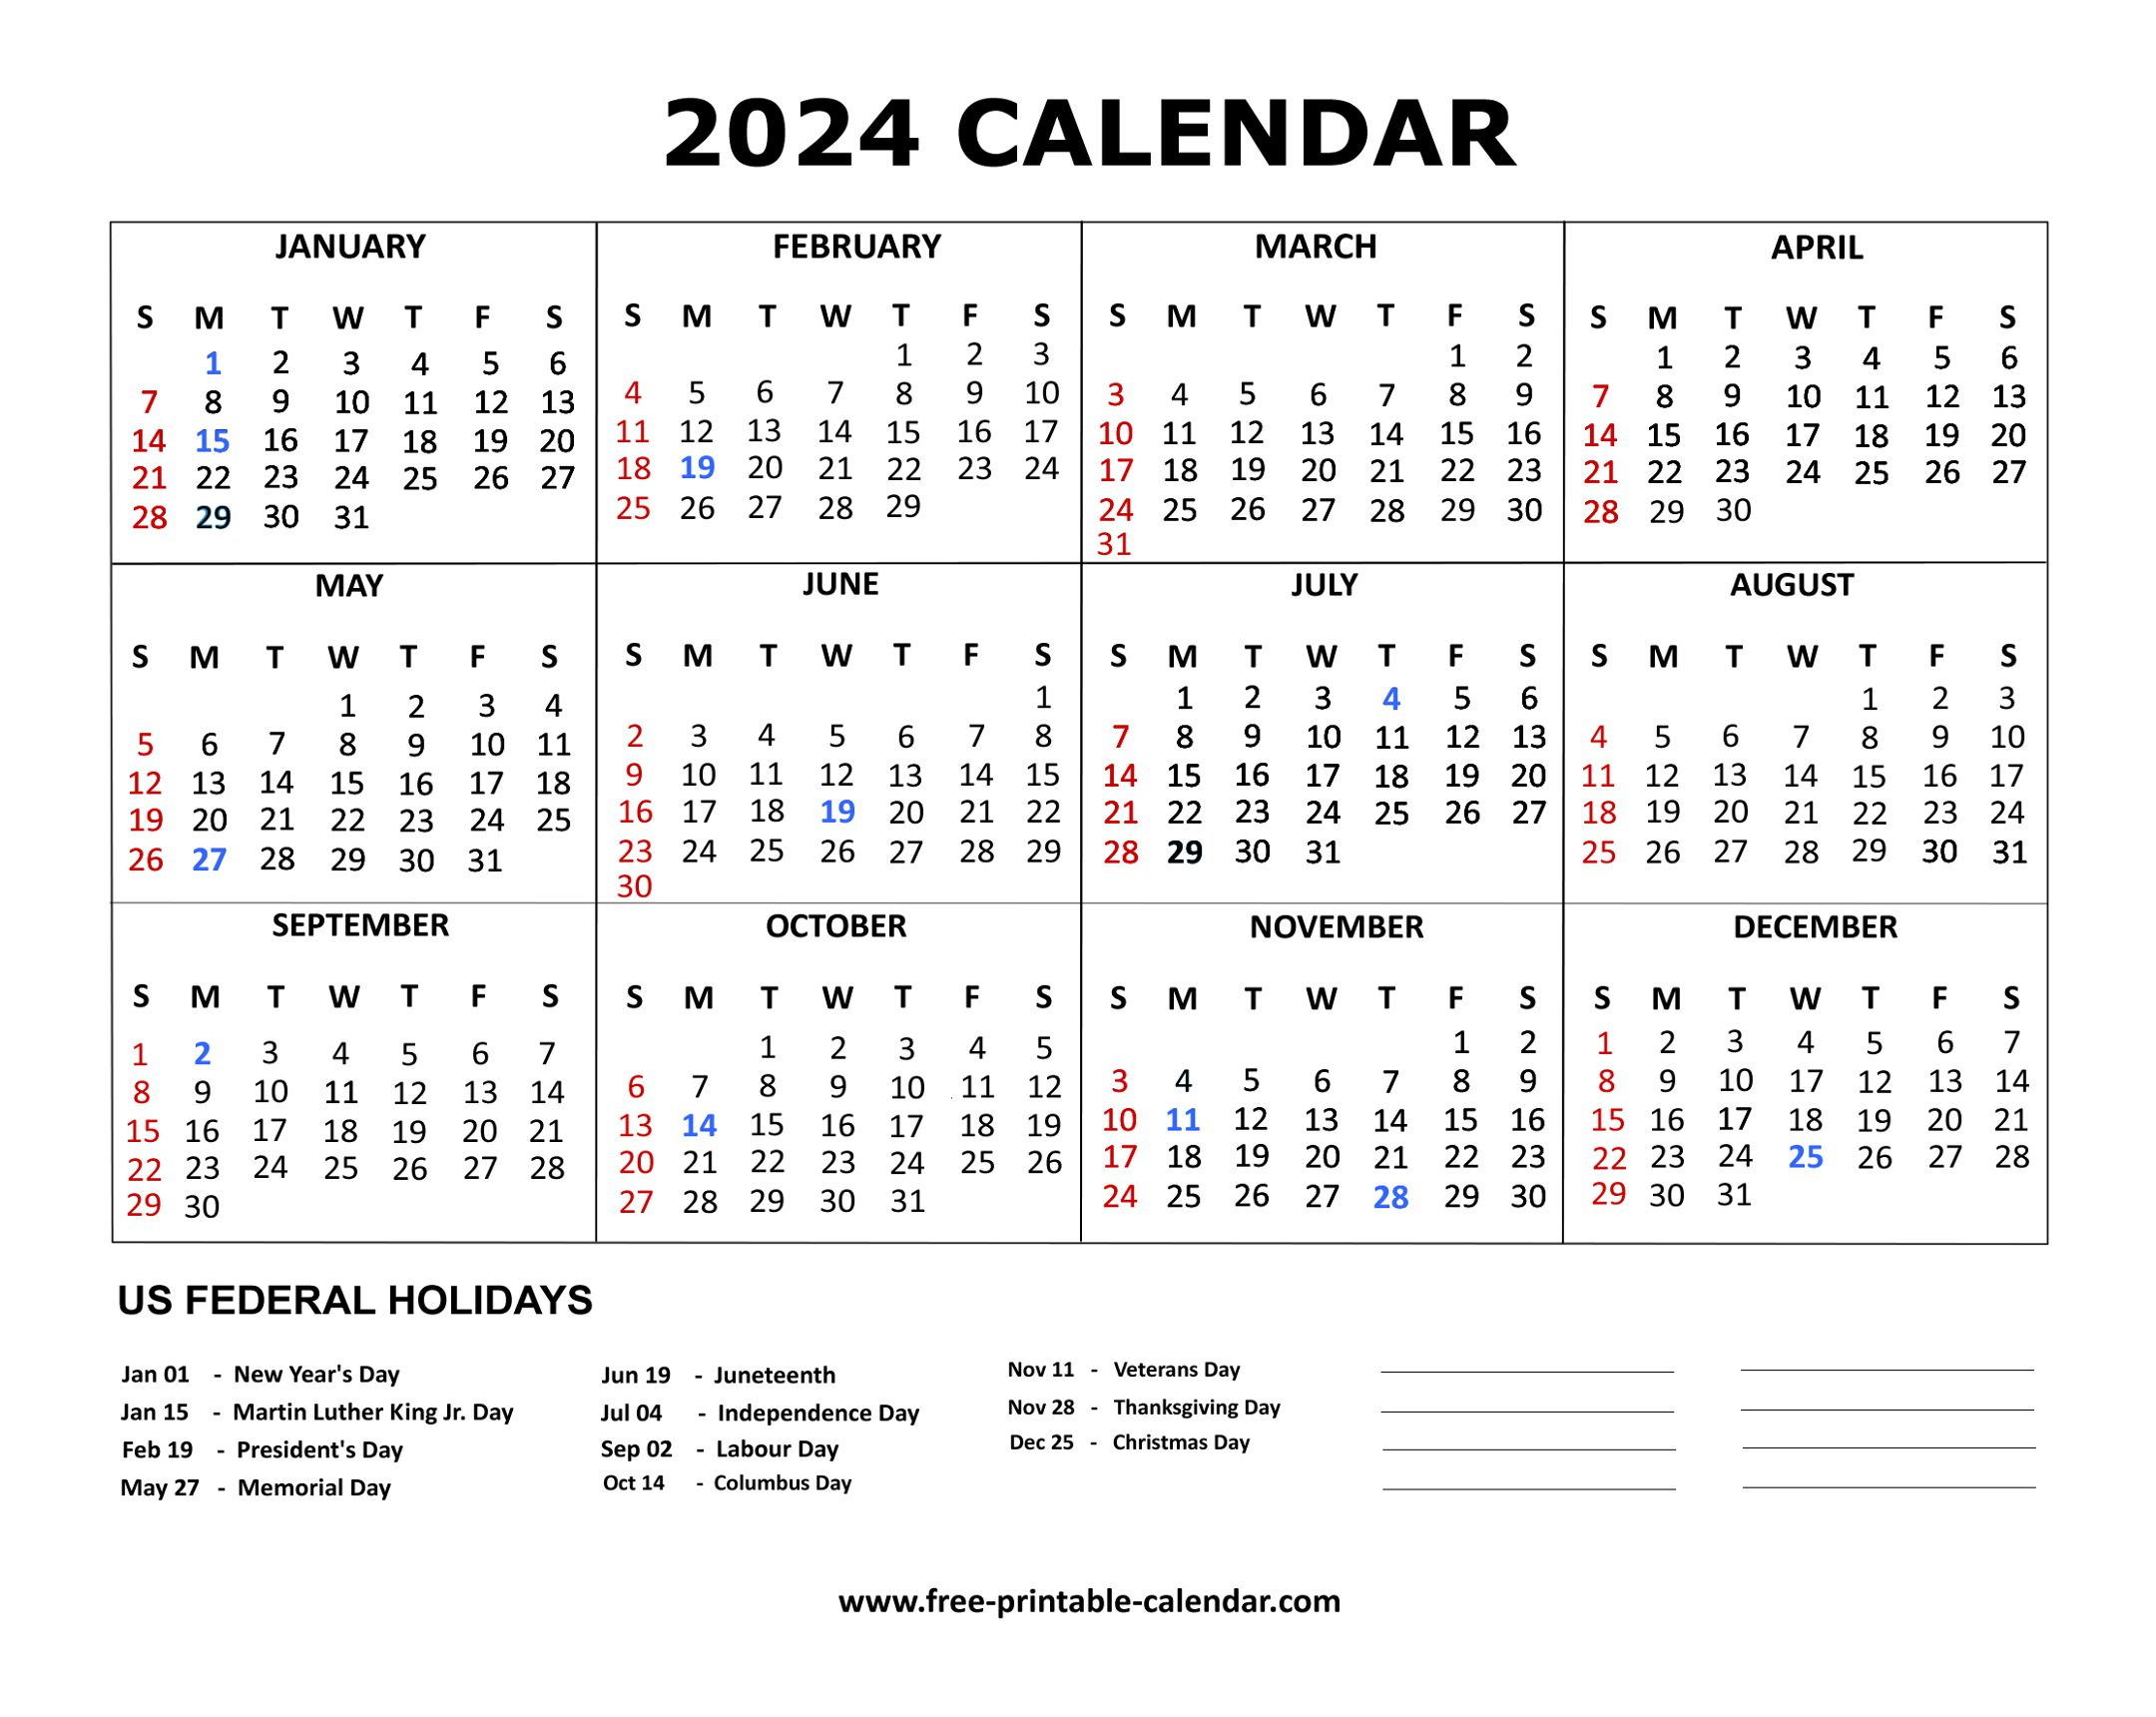 2024 Calendar | 2024 Yearly Holiday Calendar